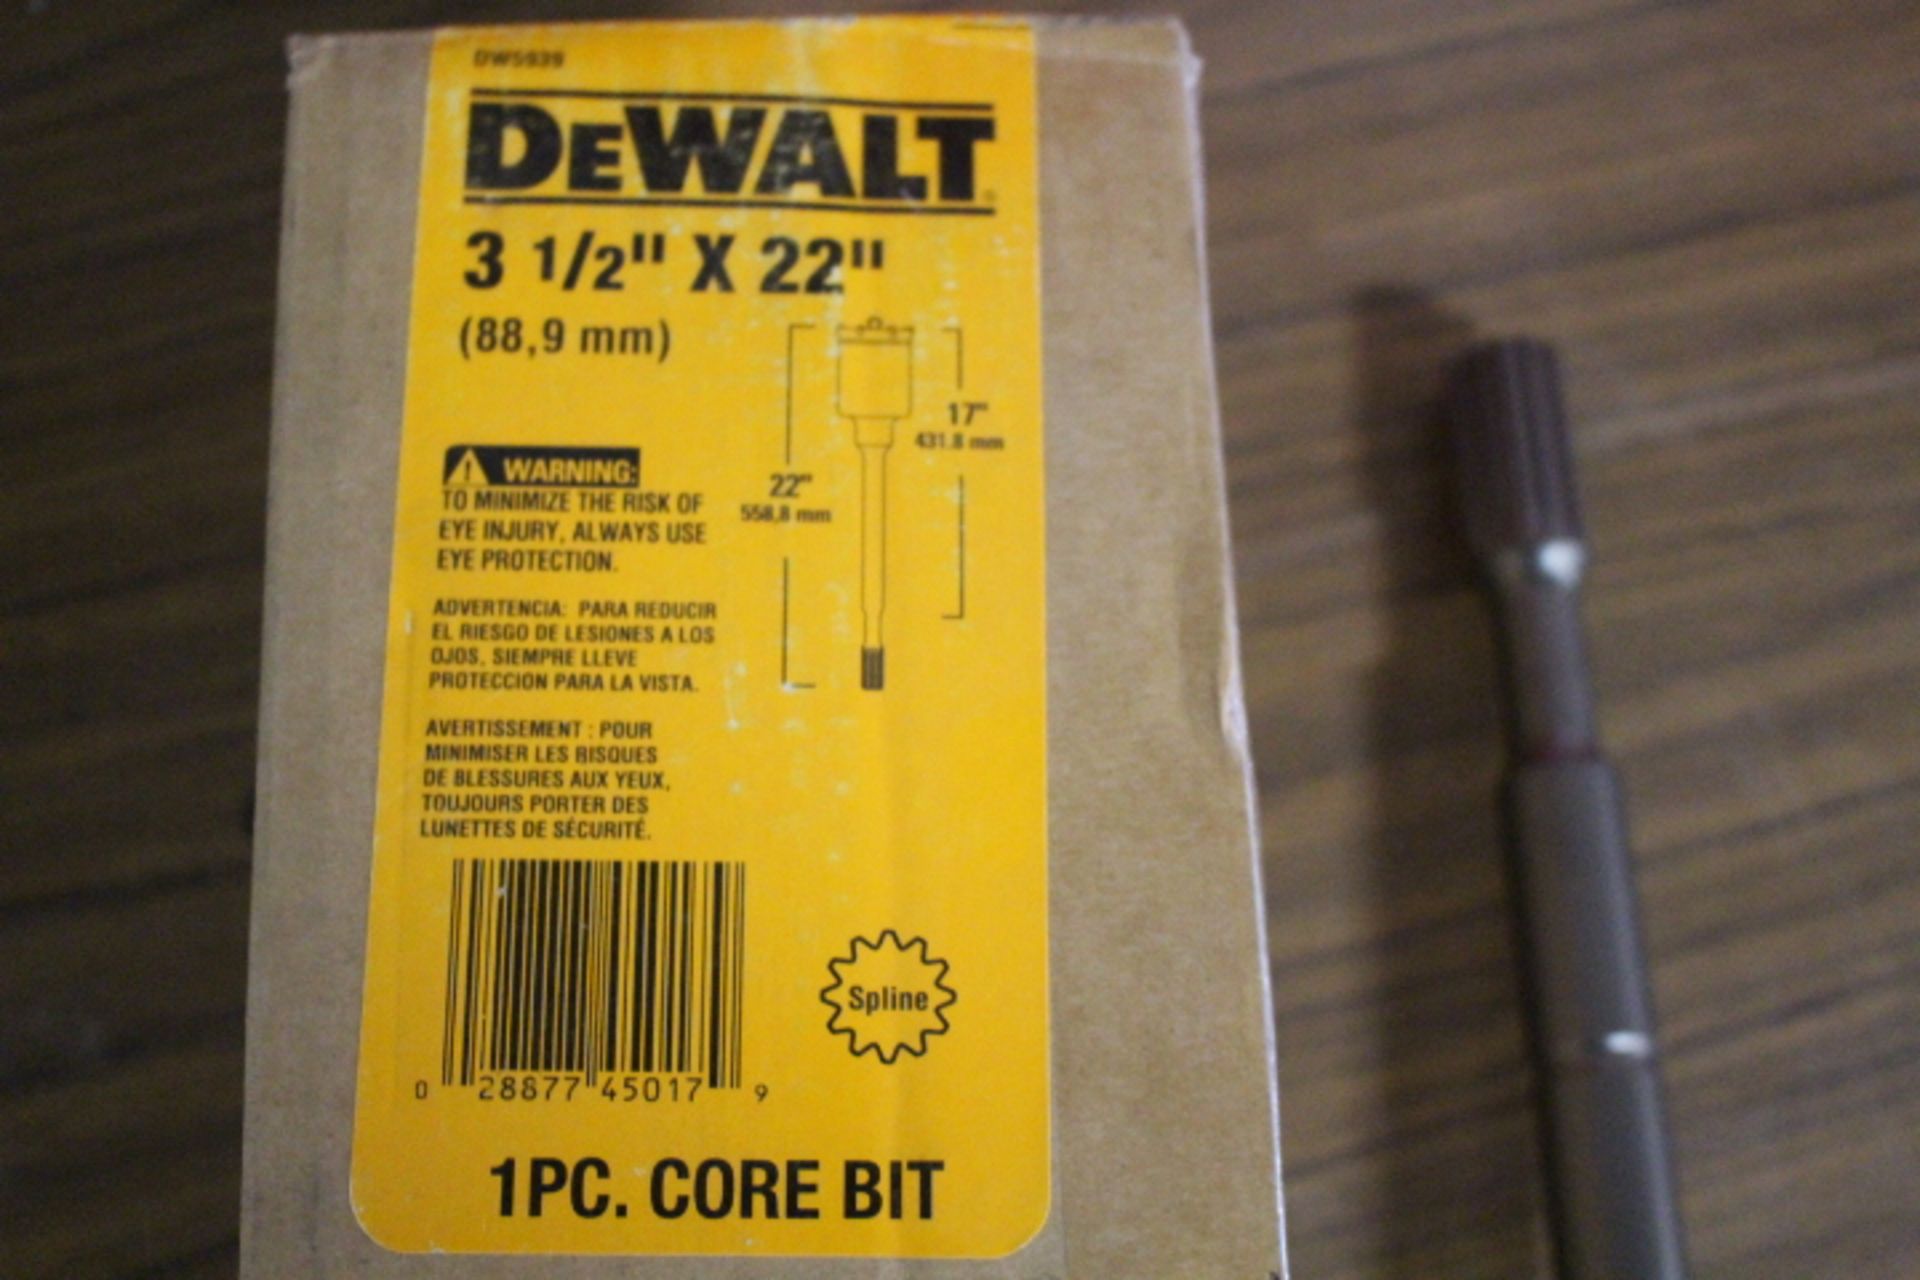 Dewalt 3 1/2" X 22" Core Bit (Spline Drive) - Image 2 of 2